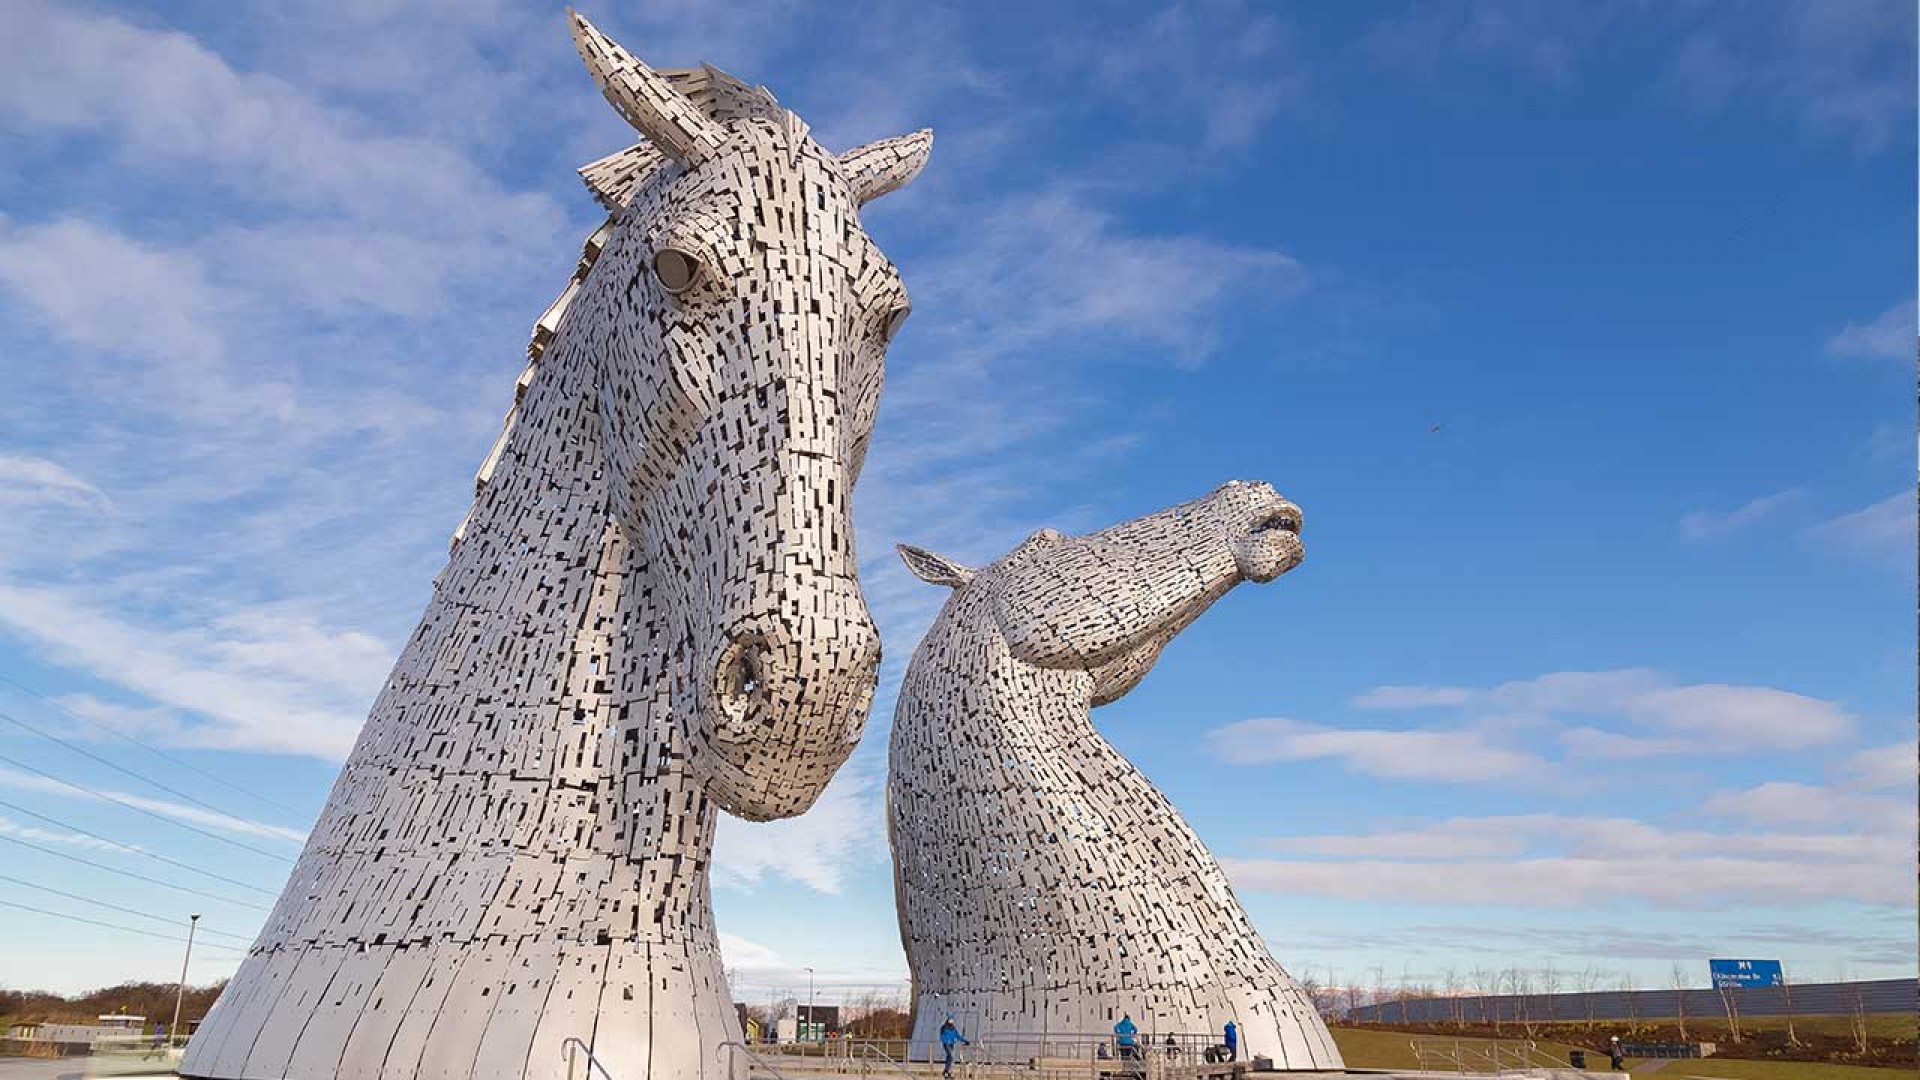 The Kelpies, Scotland - Sculpture by Andy Scott